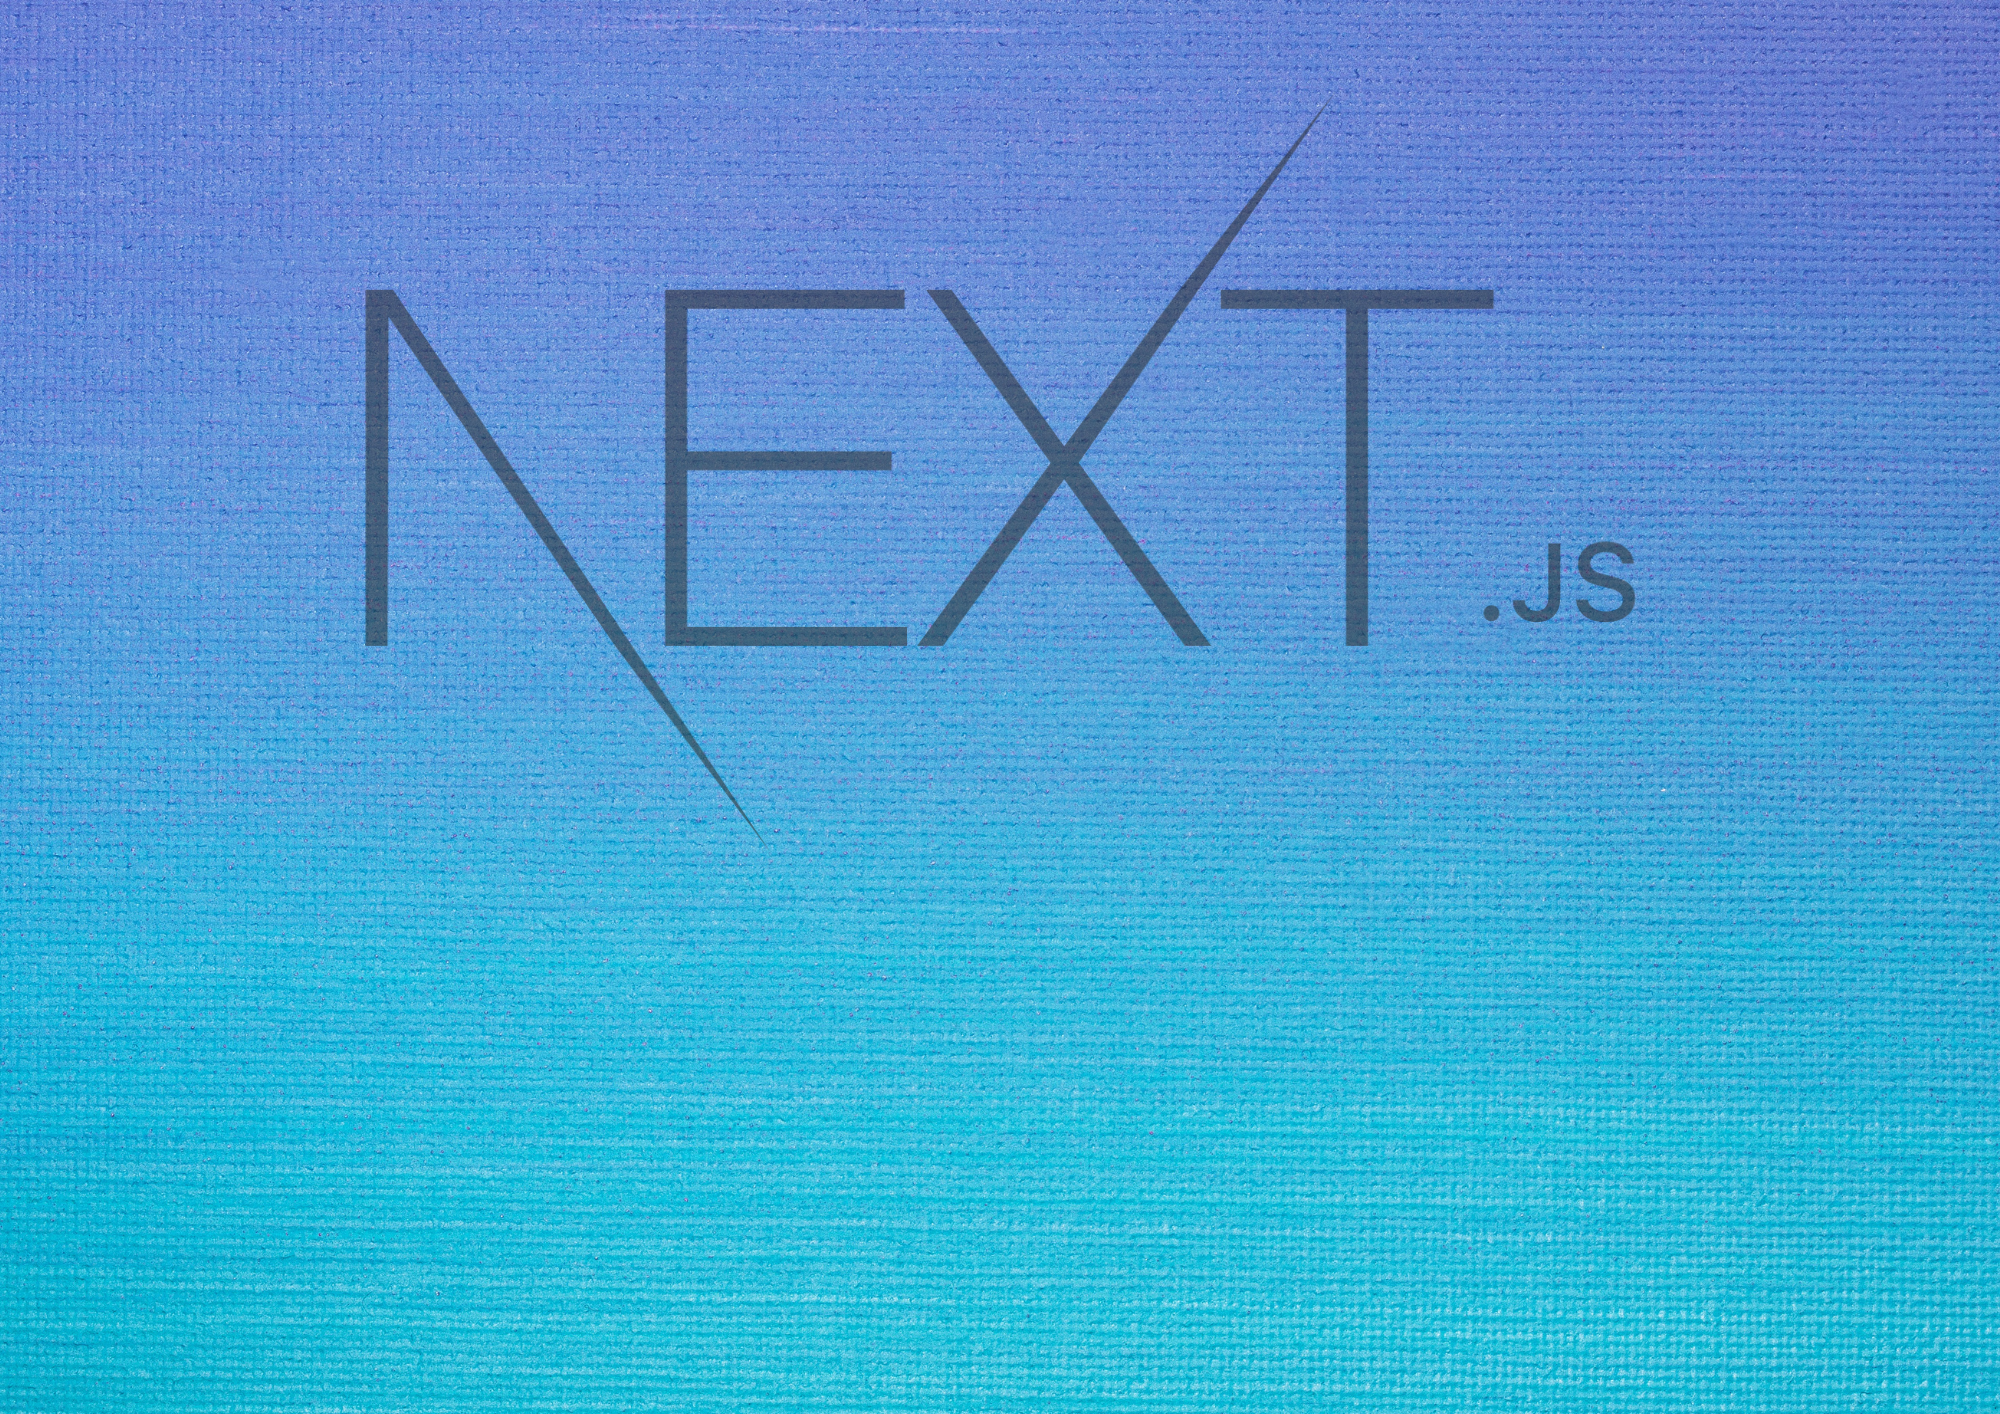 NextJS Core Web Vitals - measure the Core Web Vitals